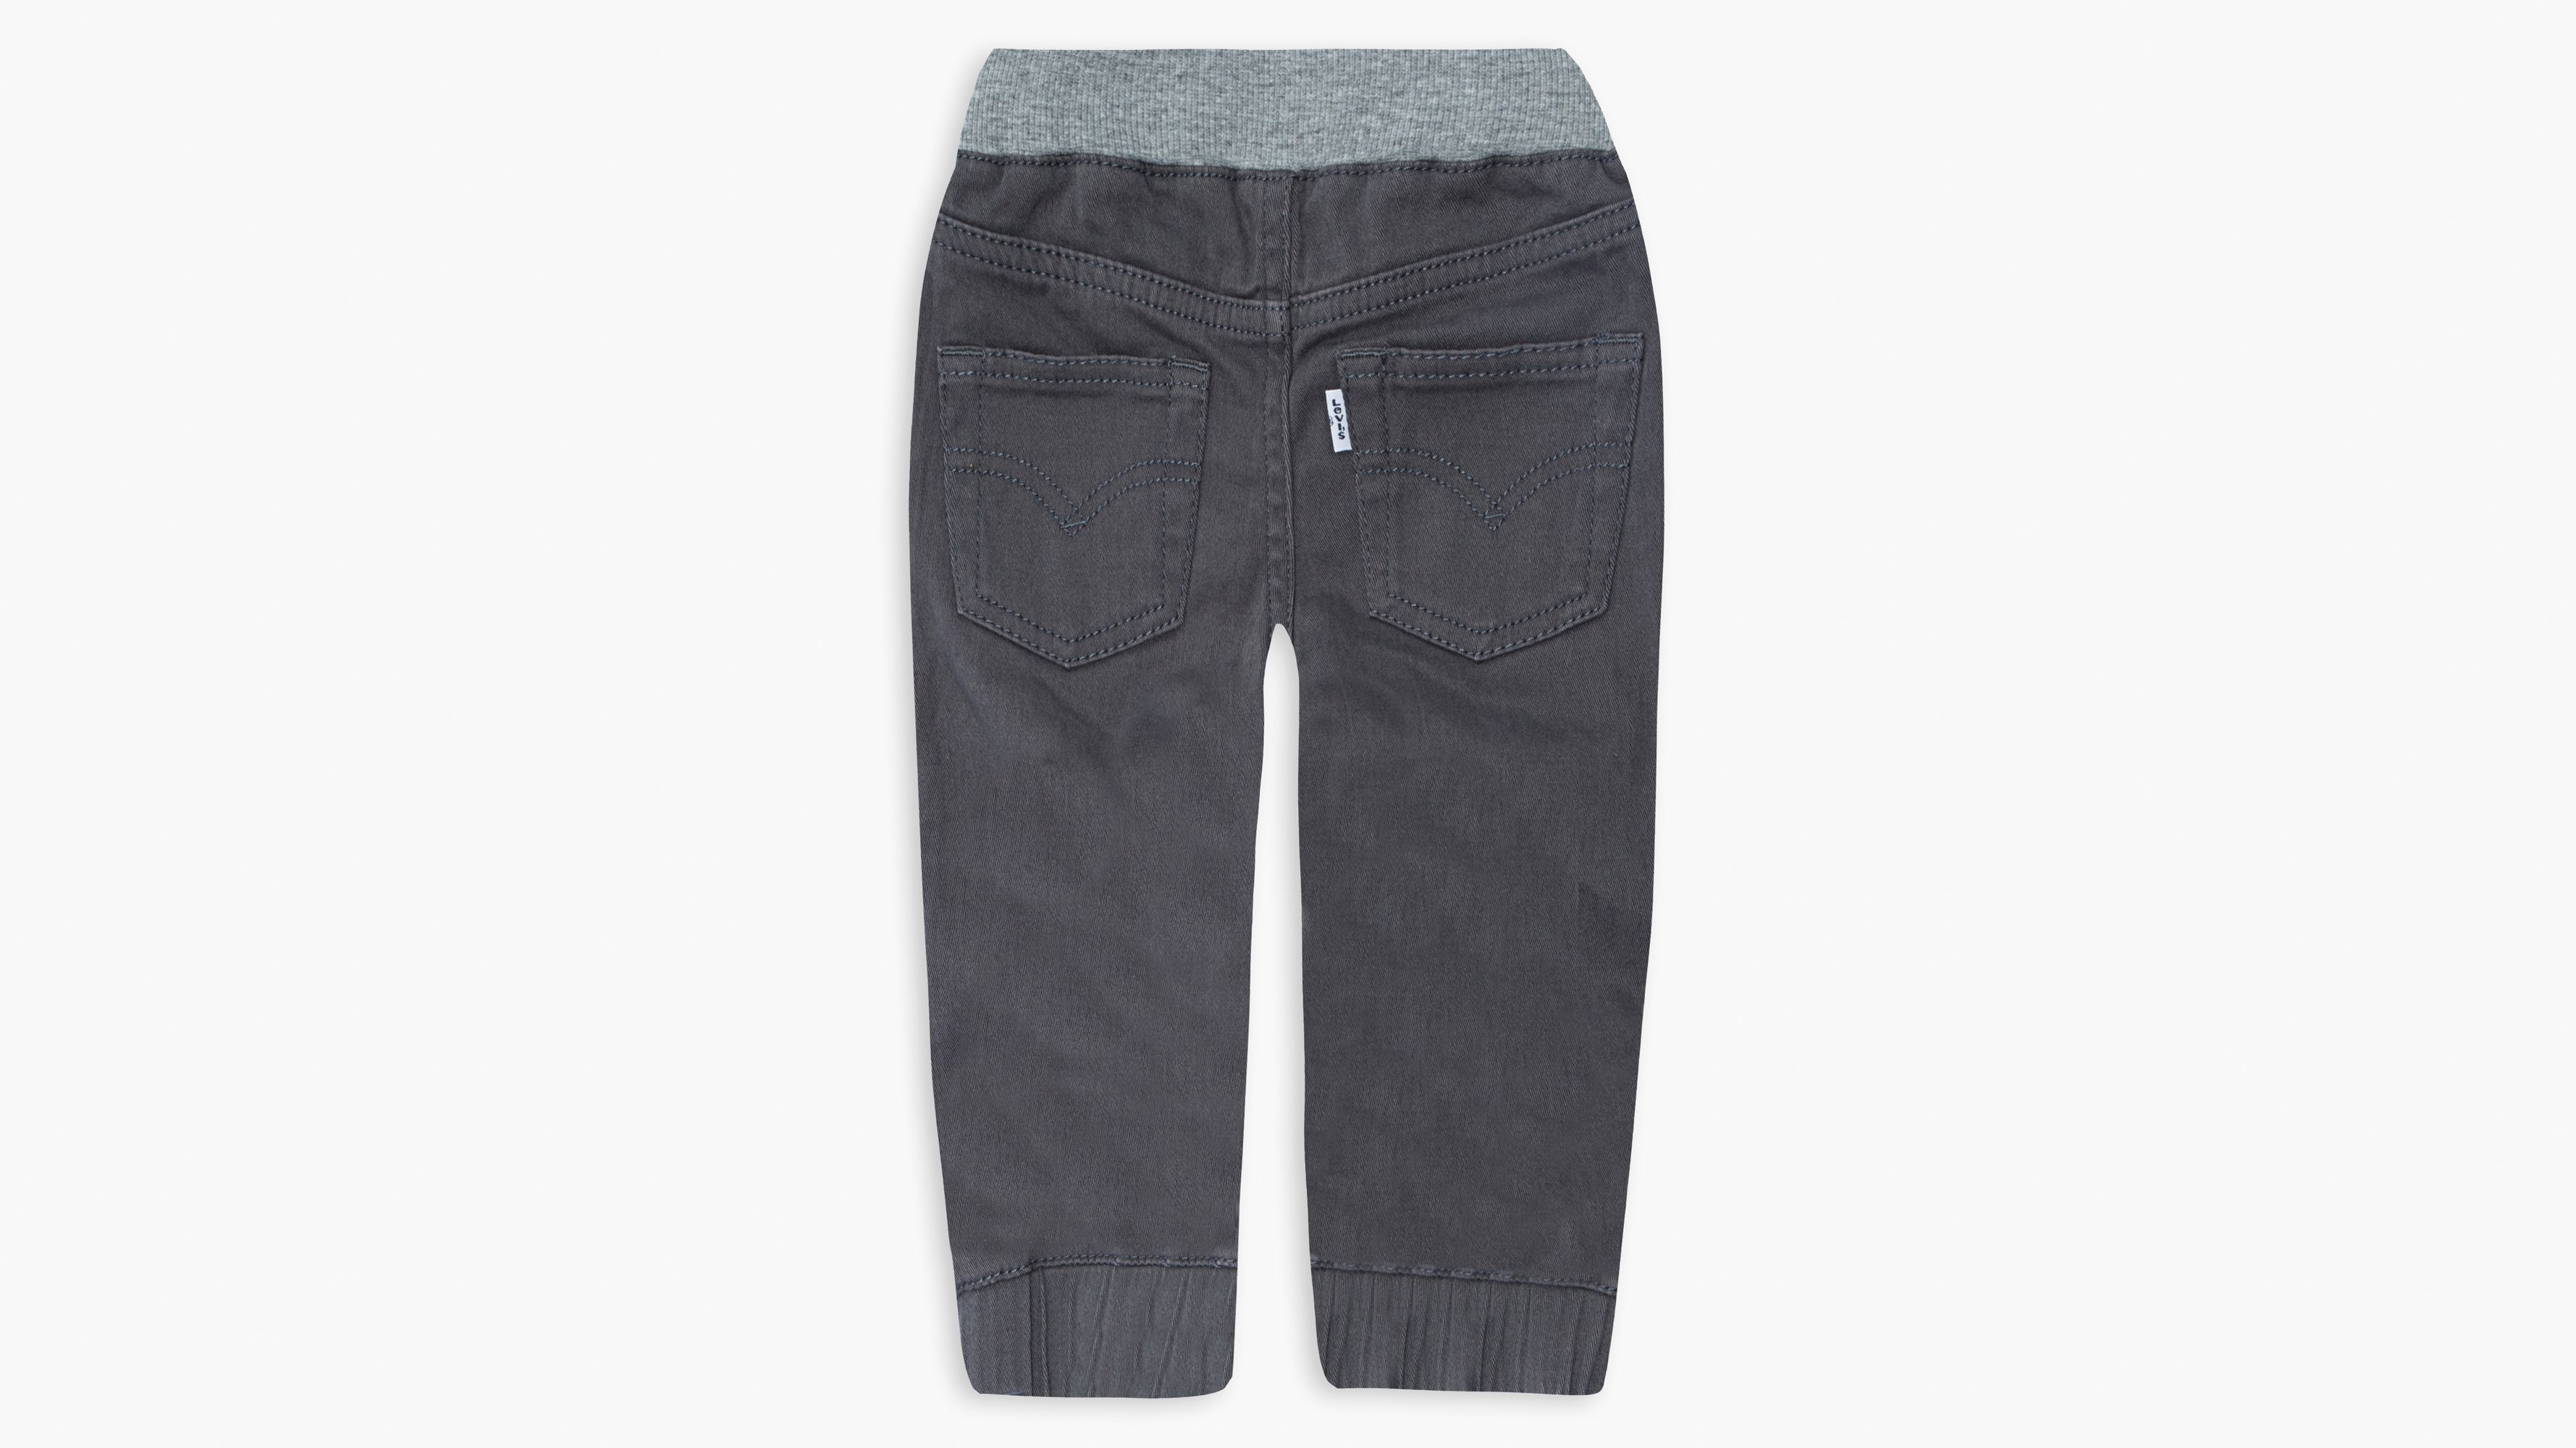 grey jogger jeans